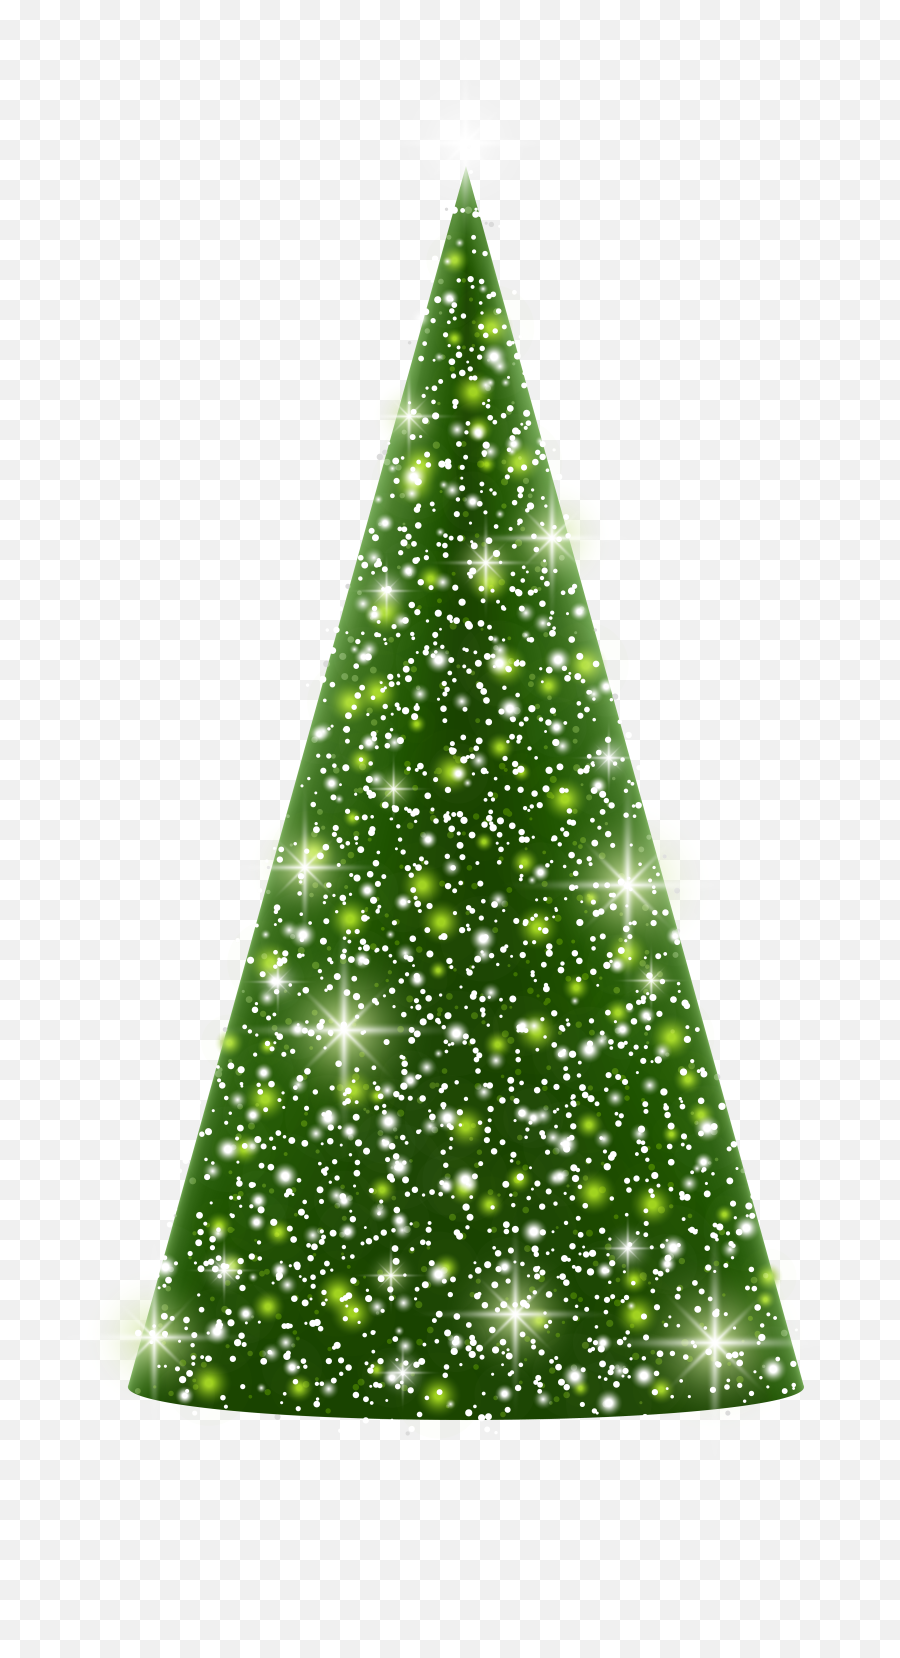 Evergreen Tree Png Files - Christmas Tree Emoji,Evergreen Tree Emoji